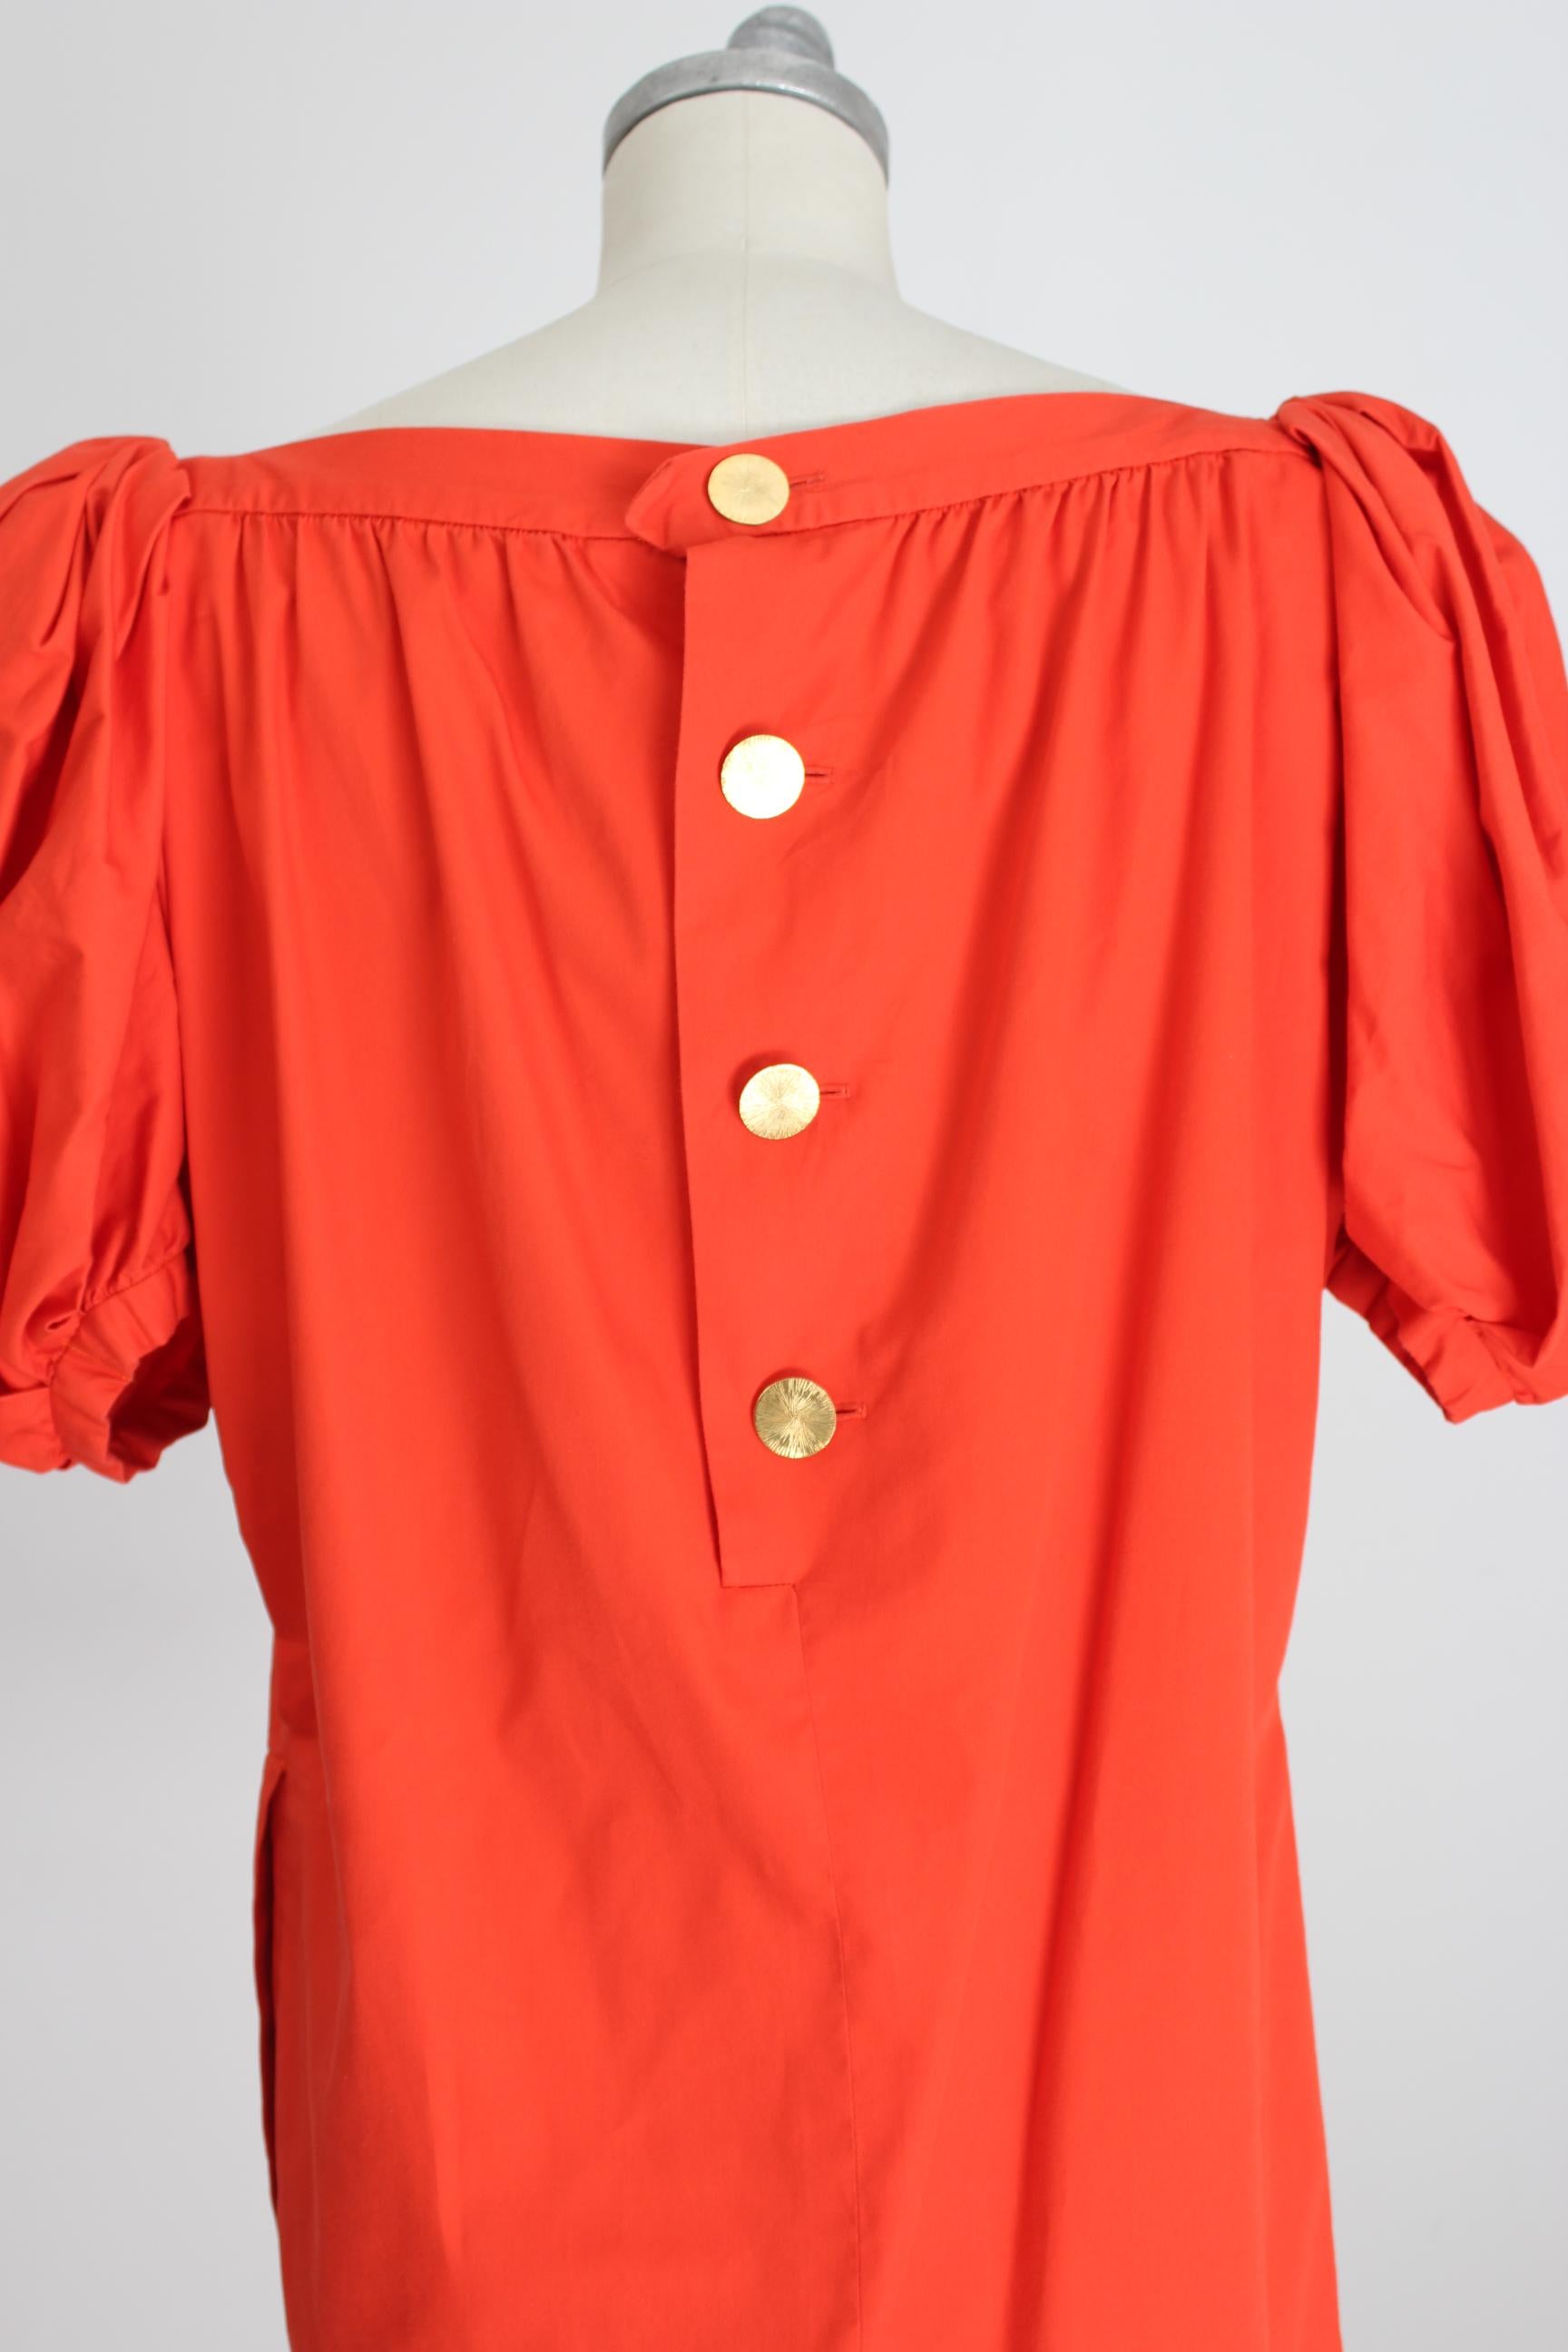 Yves Saint Laurent Rive Gauche Red Cotton Straight Cocktail Dress 1980s 2